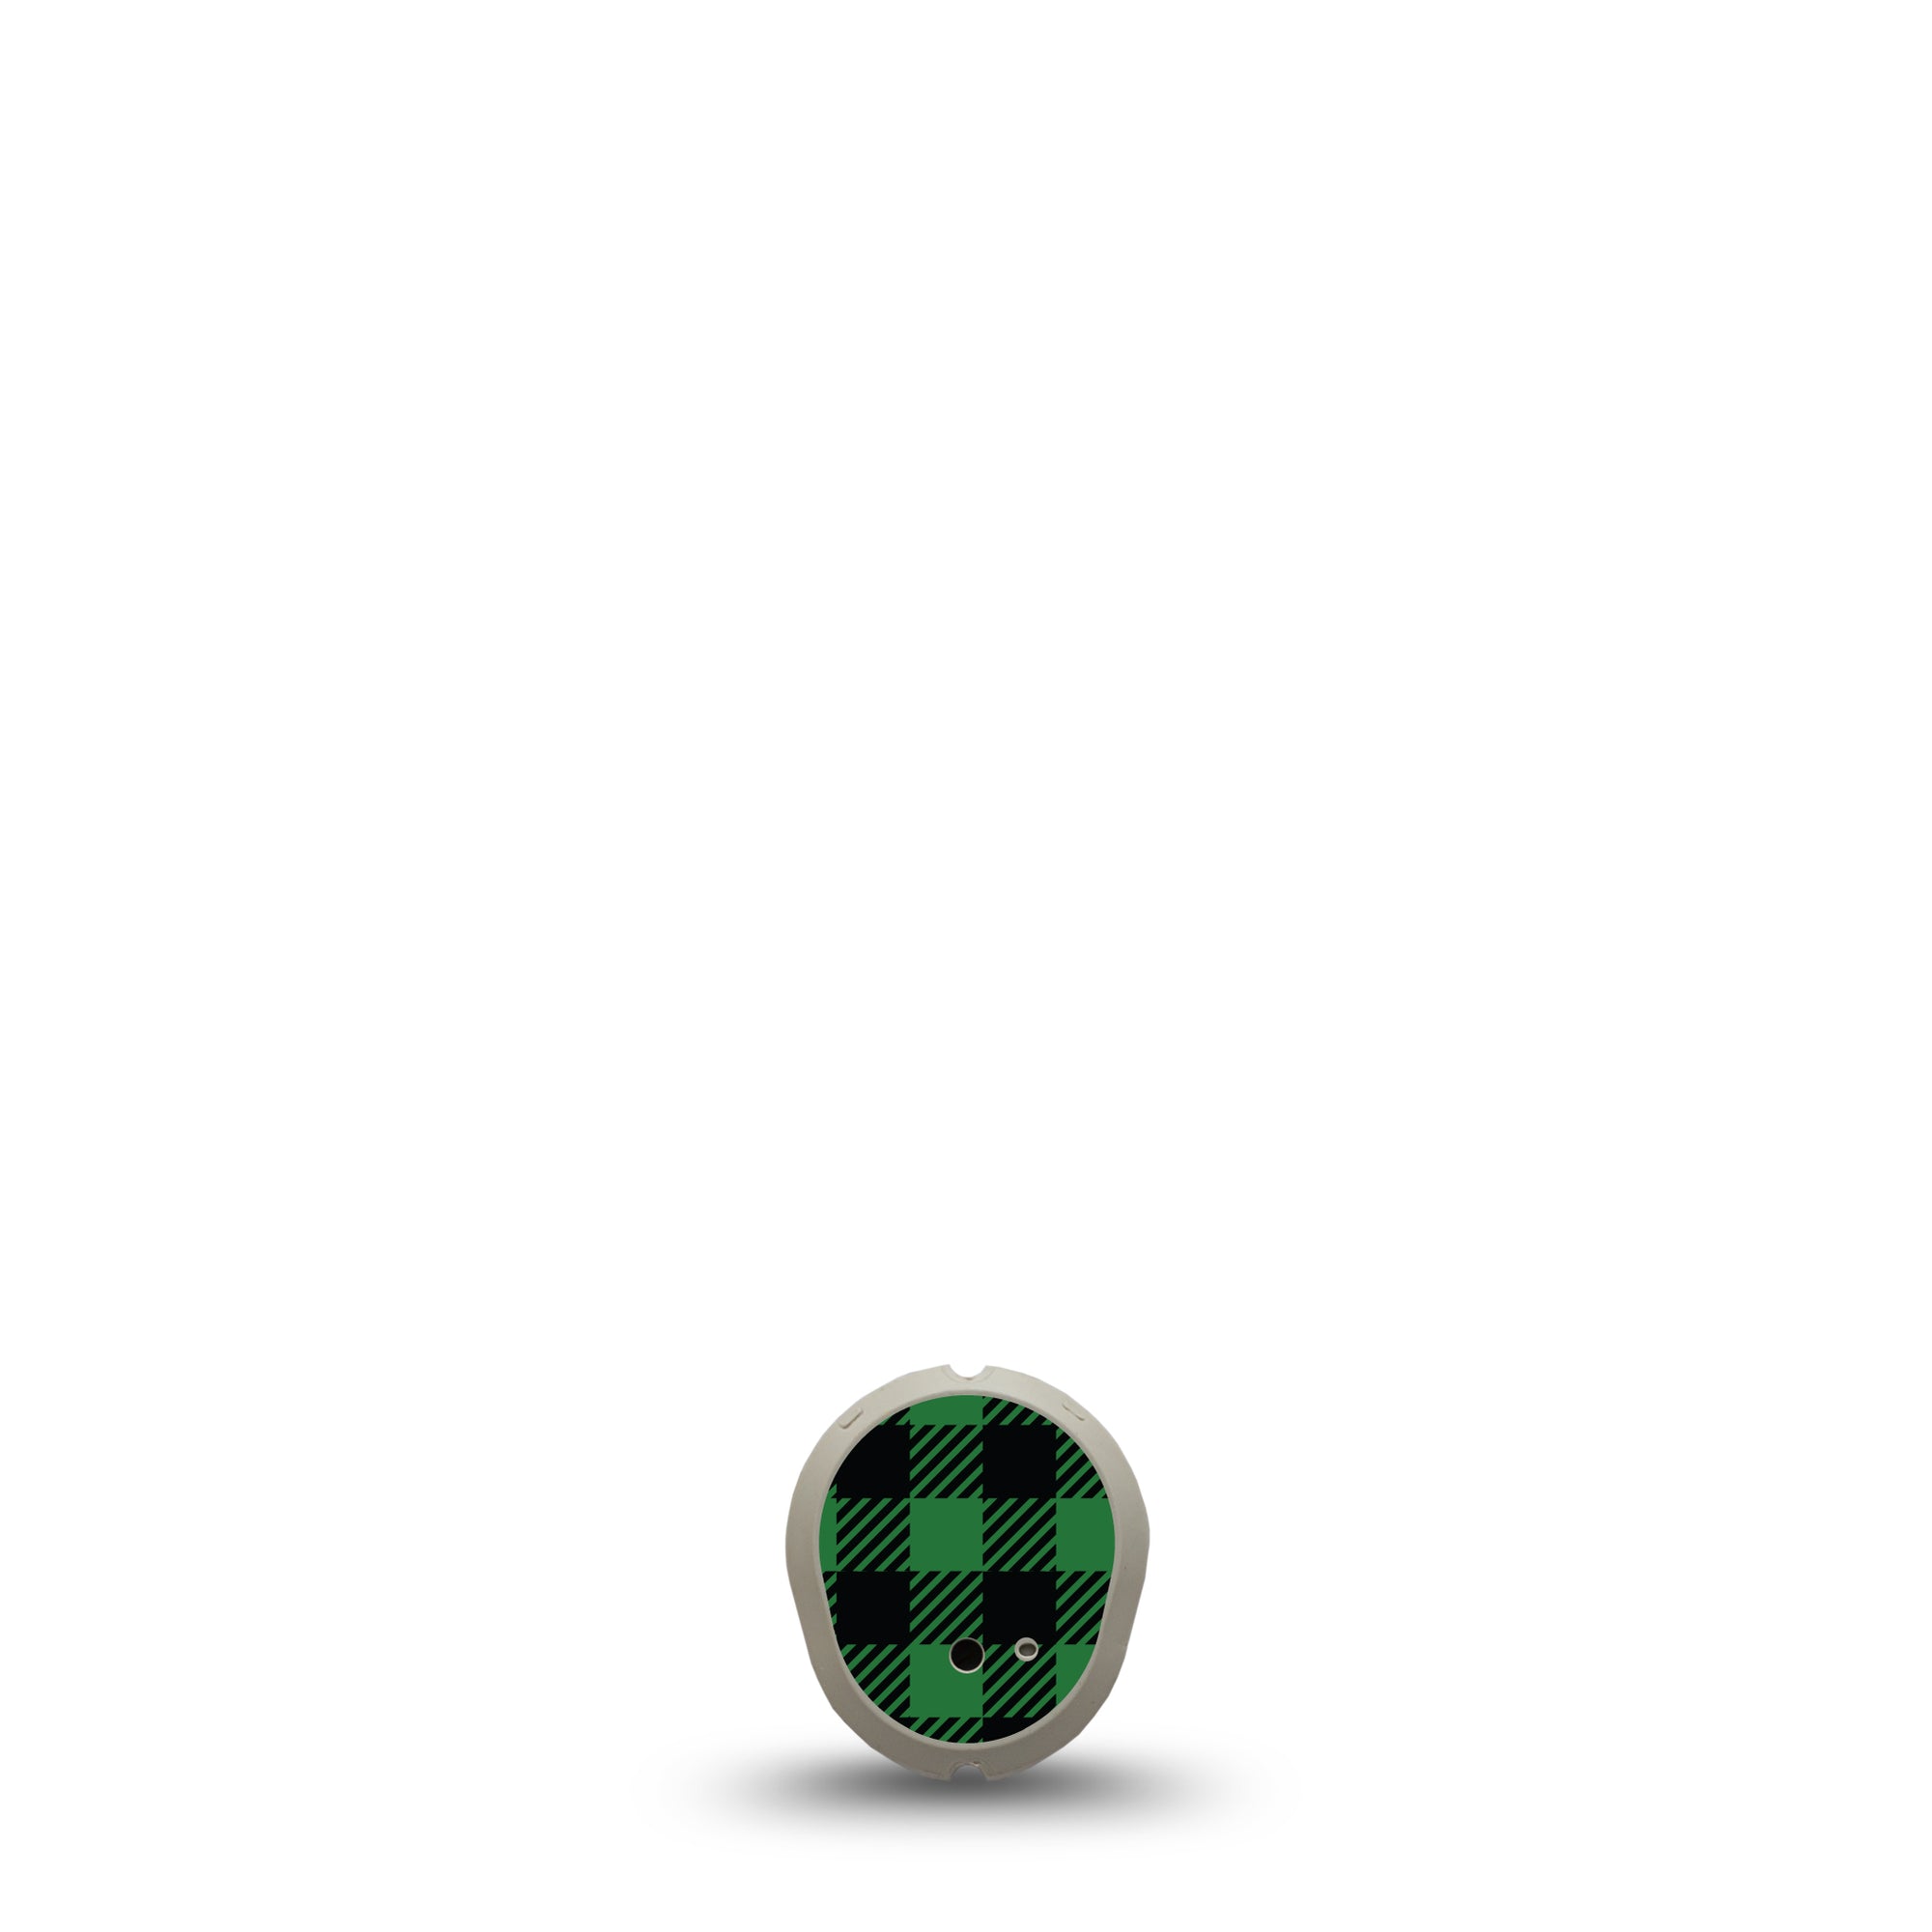 Embroidered Clover Dexcom G7 Transmitter Sticker, Single, Checkered Black And Green Inspired, Adhesive Sticker Design